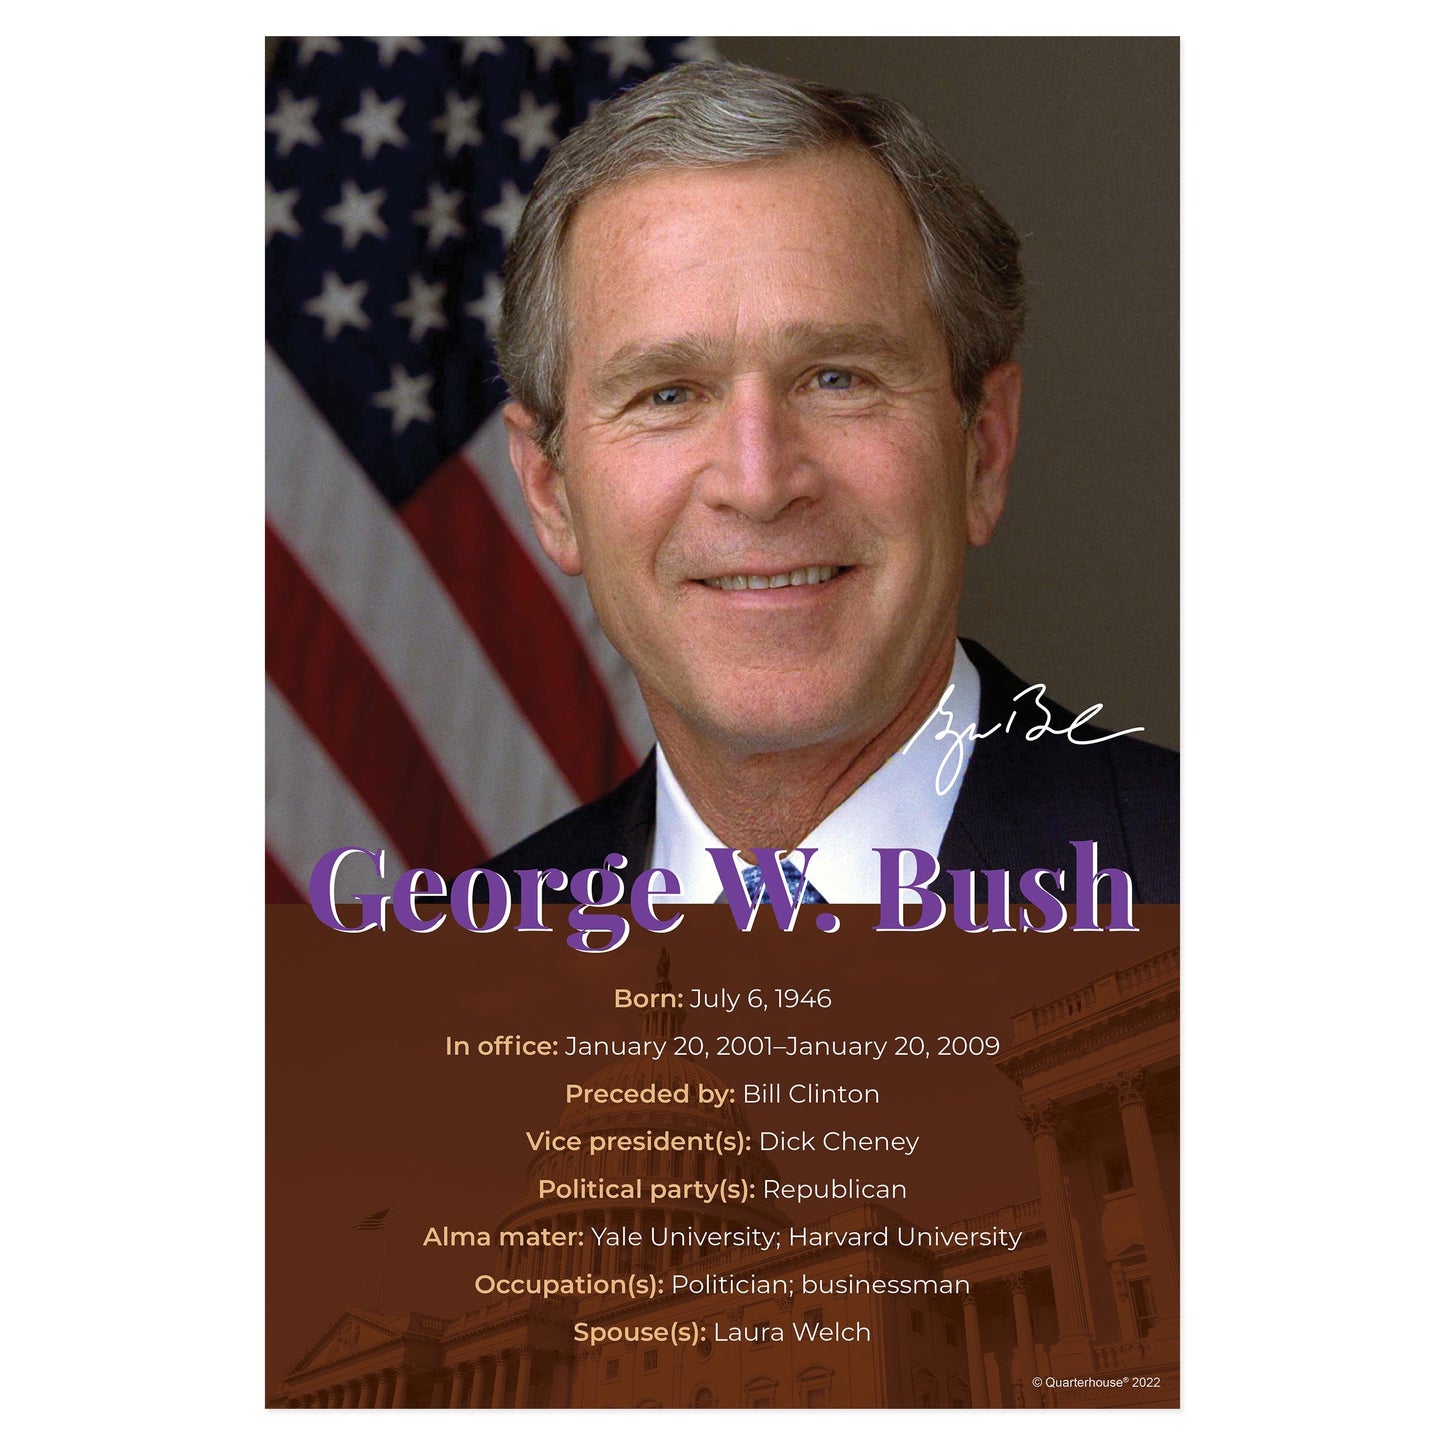 Quarterhouse President George W. Bush Biographical Poster, Social Studies Classroom Materials for Teachers